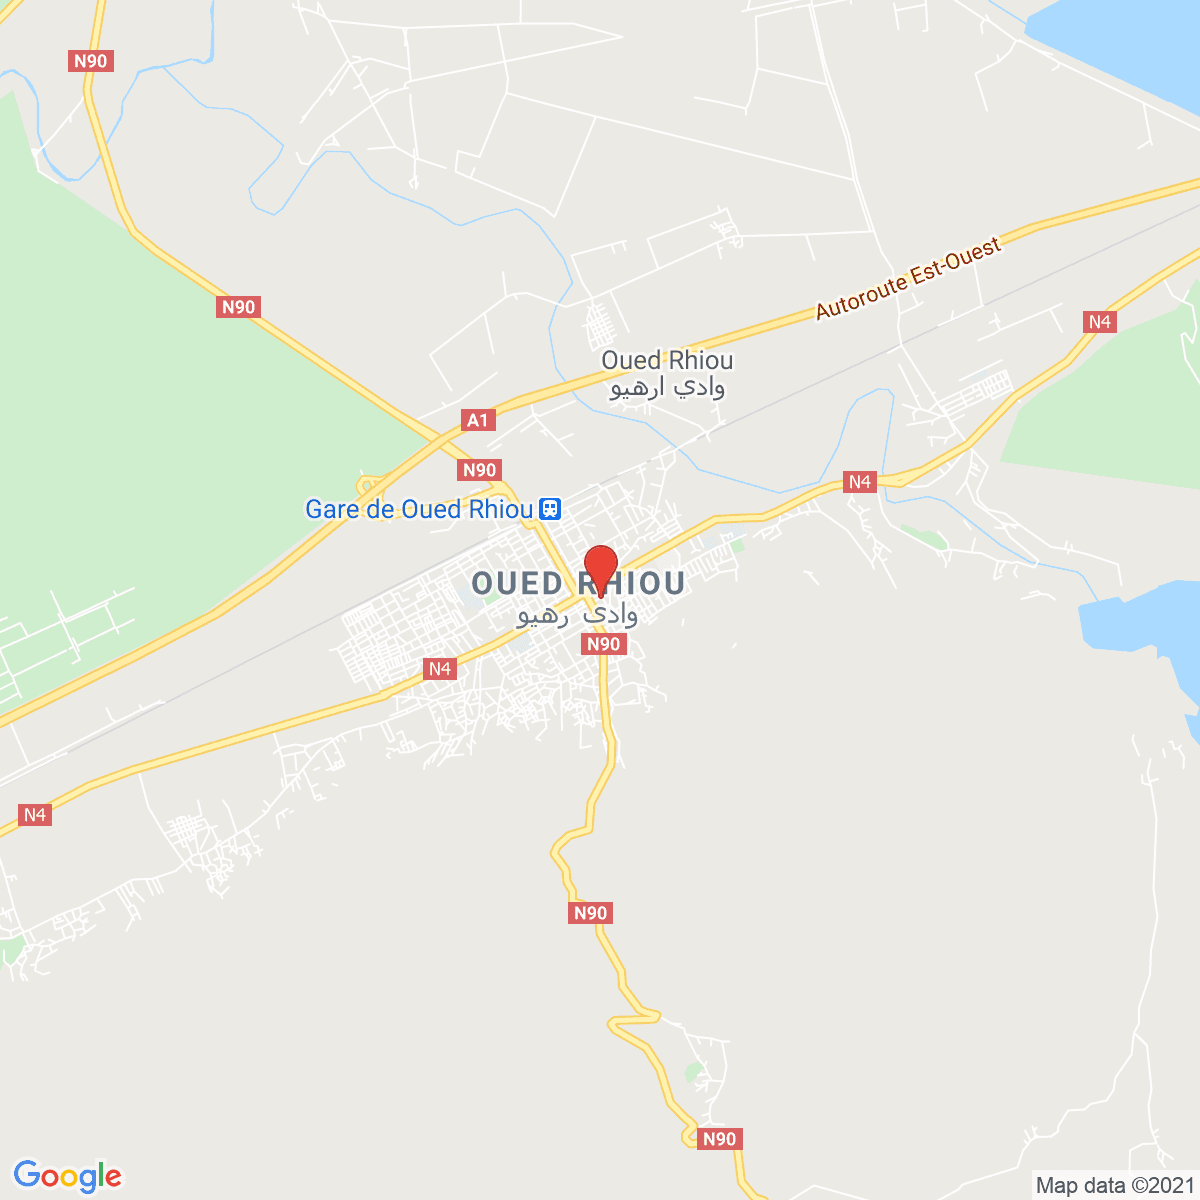 Oued Rhiou